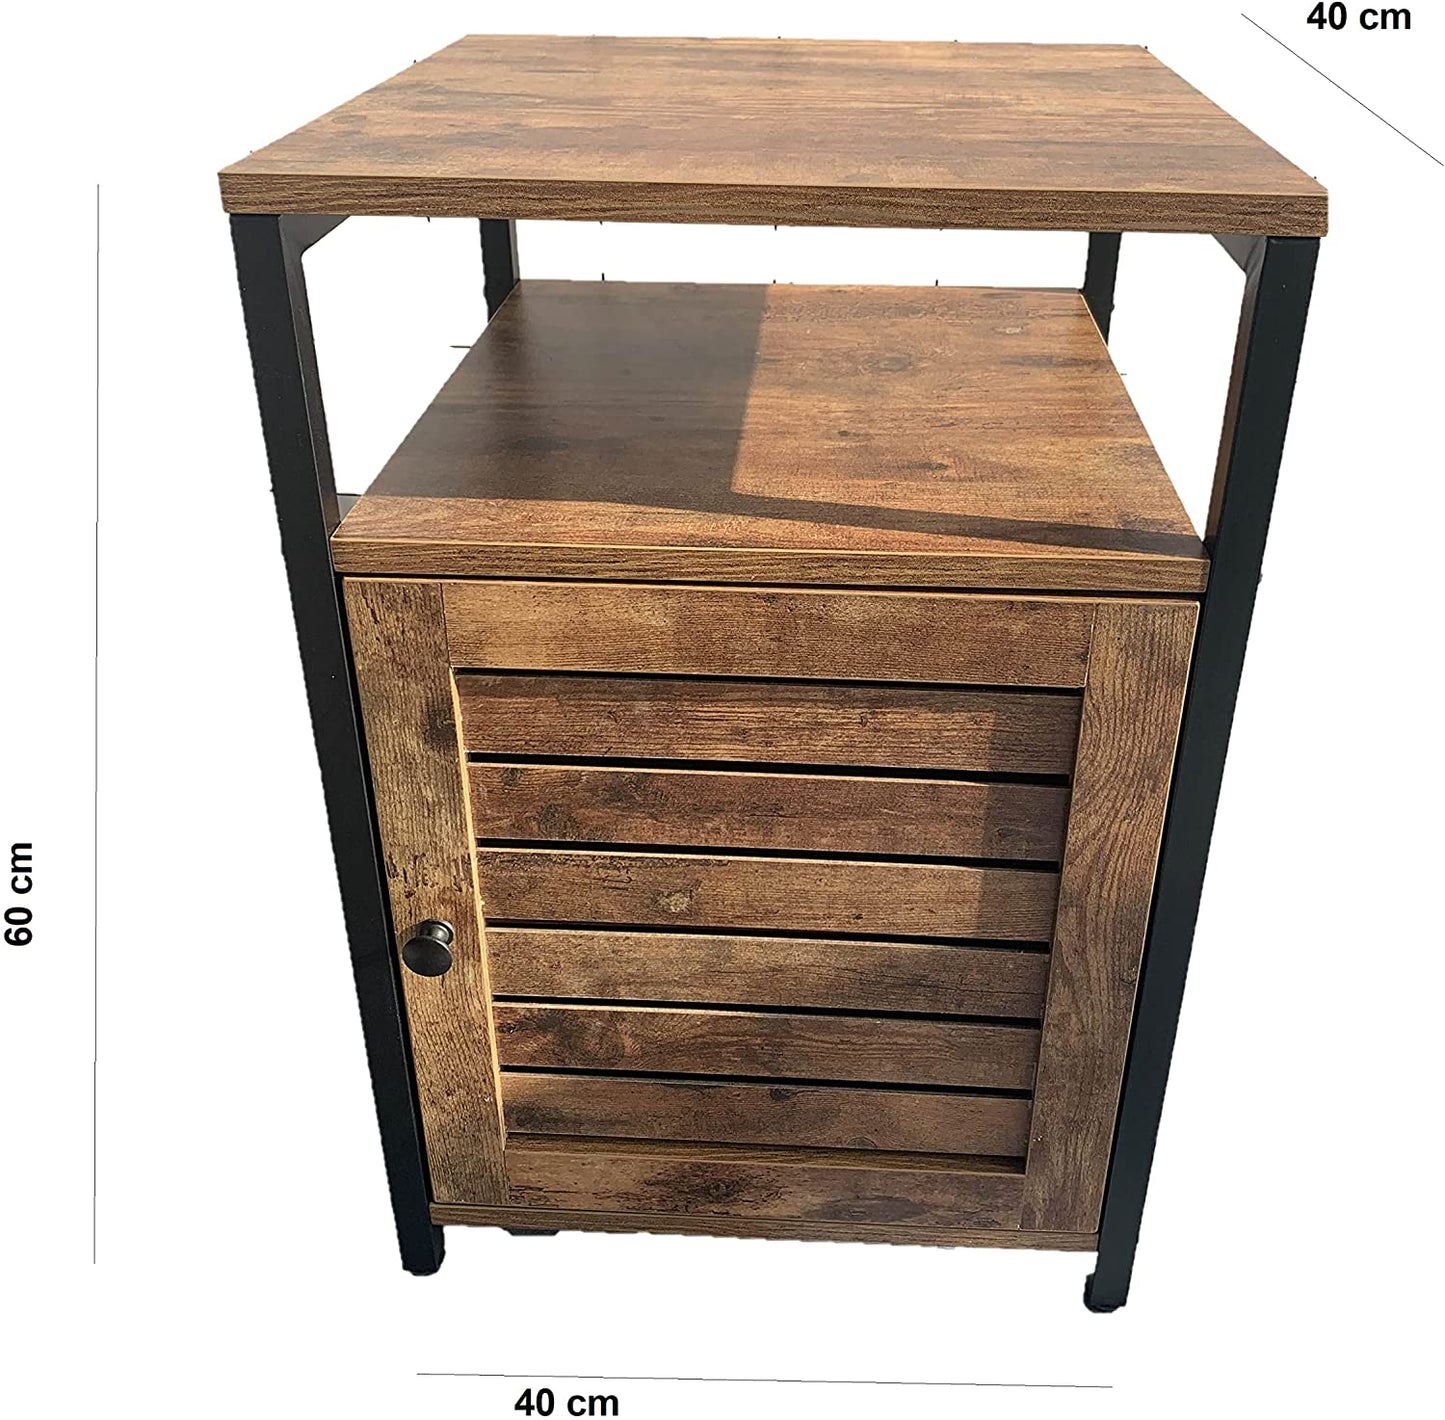 Industrial Style Wooden/Steel Rustic Bedside End Table Nightstand Shelf Cabinet With Shutter Door